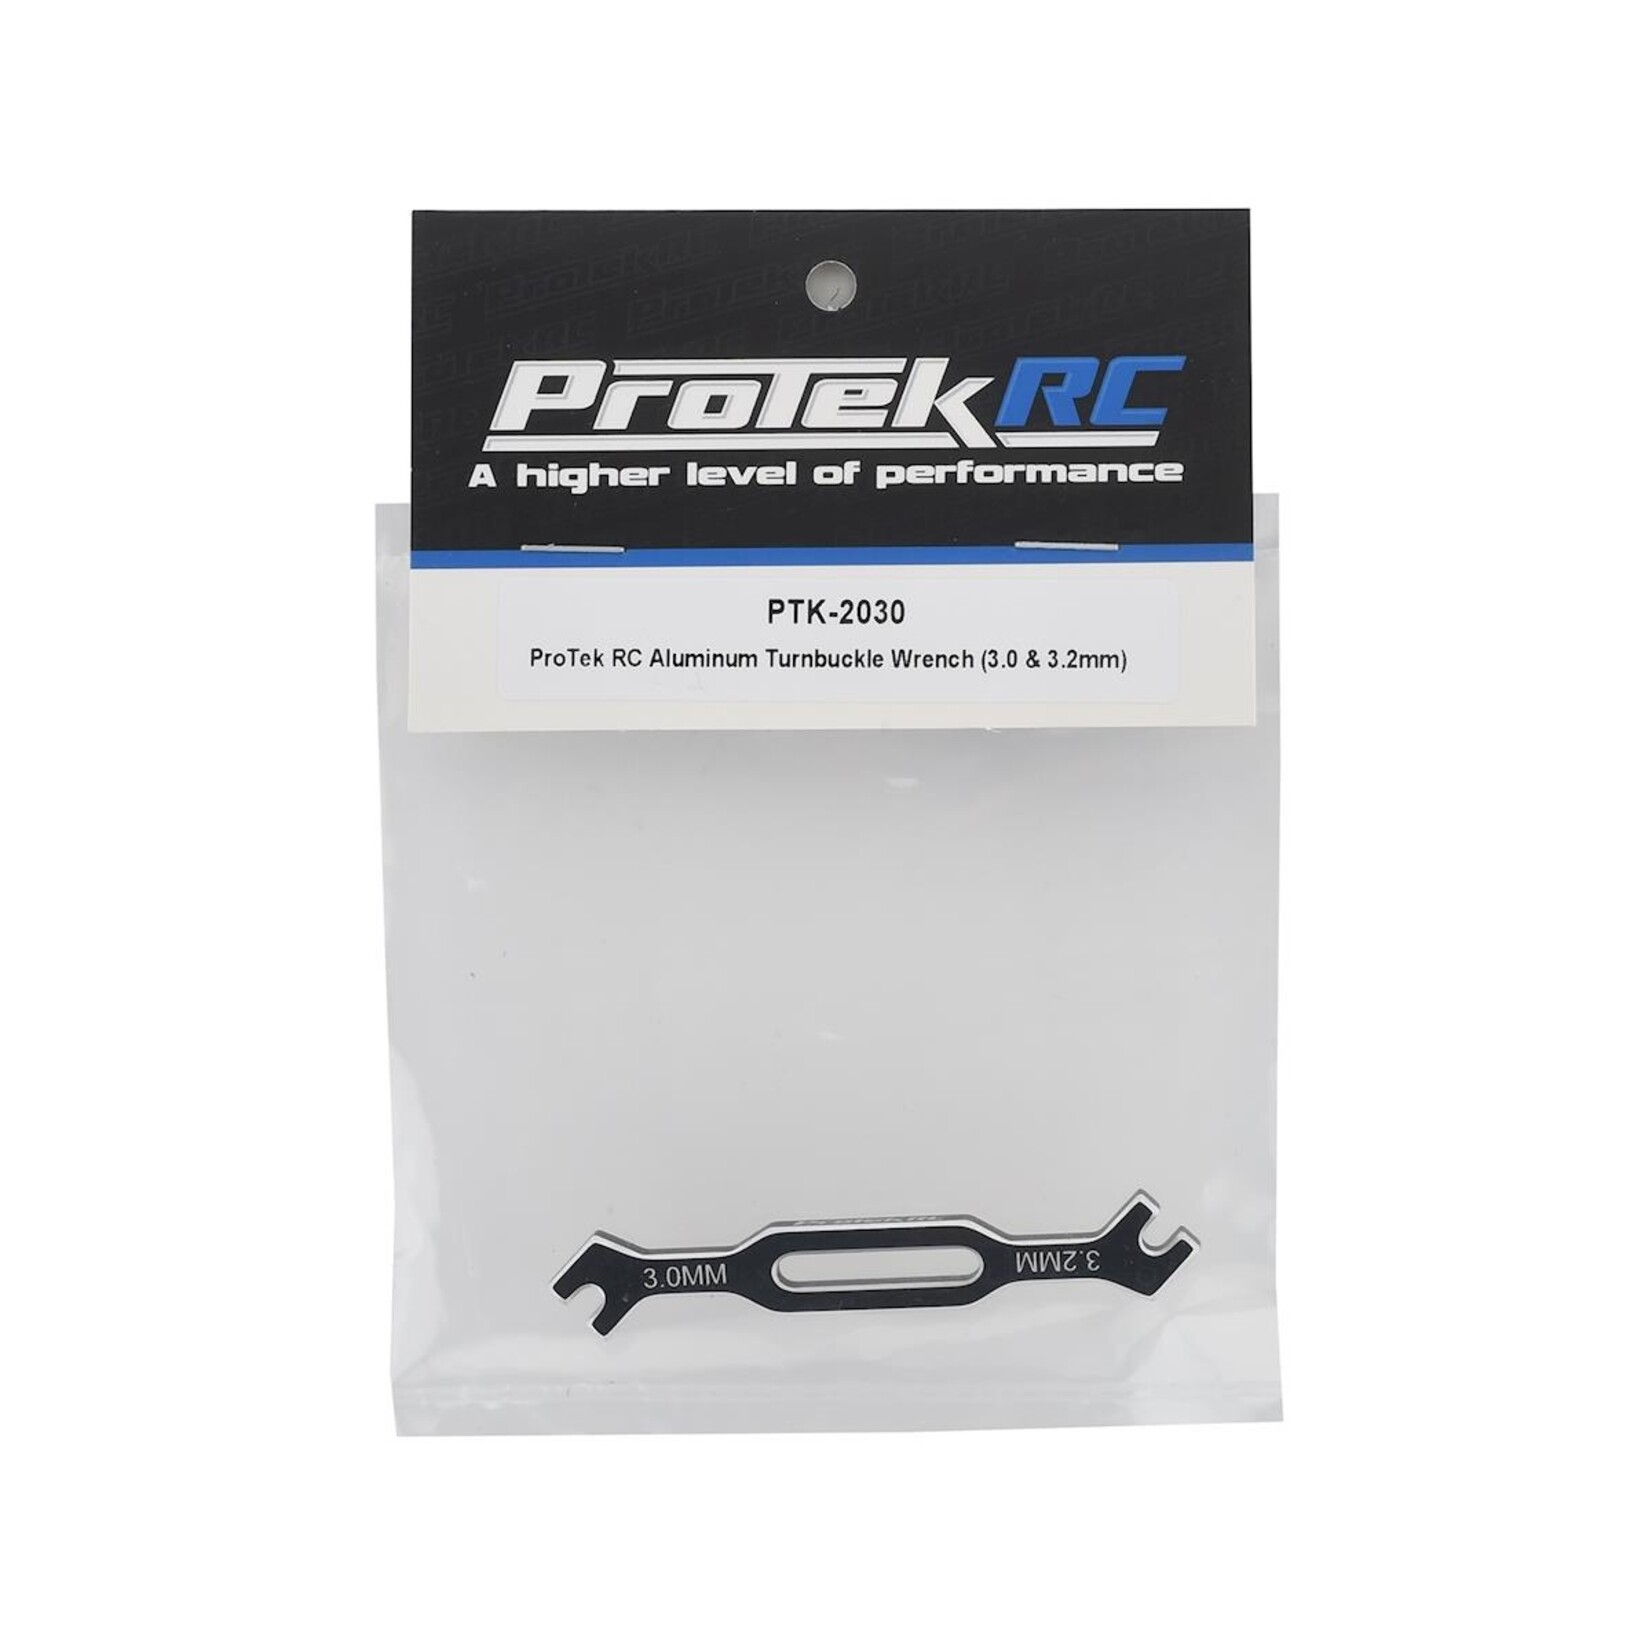 ProTek RC ProTek RC Aluminum Turnbuckle Wrench (3.0 & 3.2mm) #PTK-2030